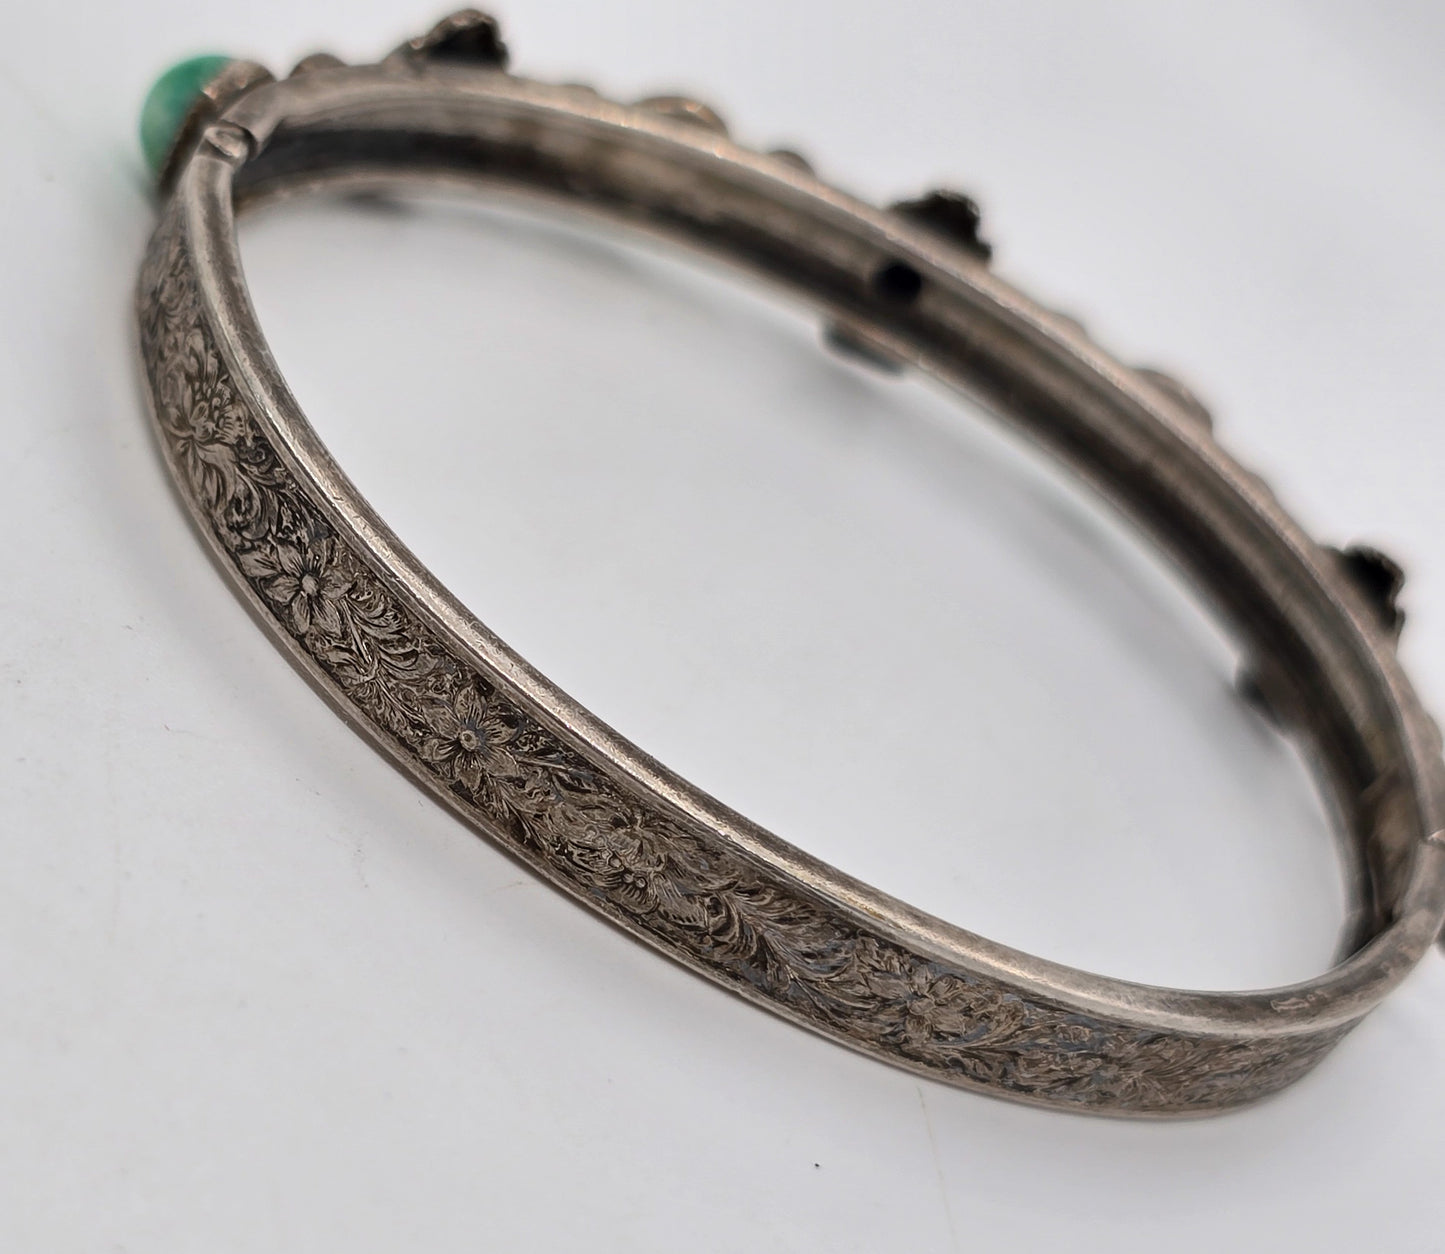 Peking glass green Czech glass vintage 1940's etched shell bangle bracelet